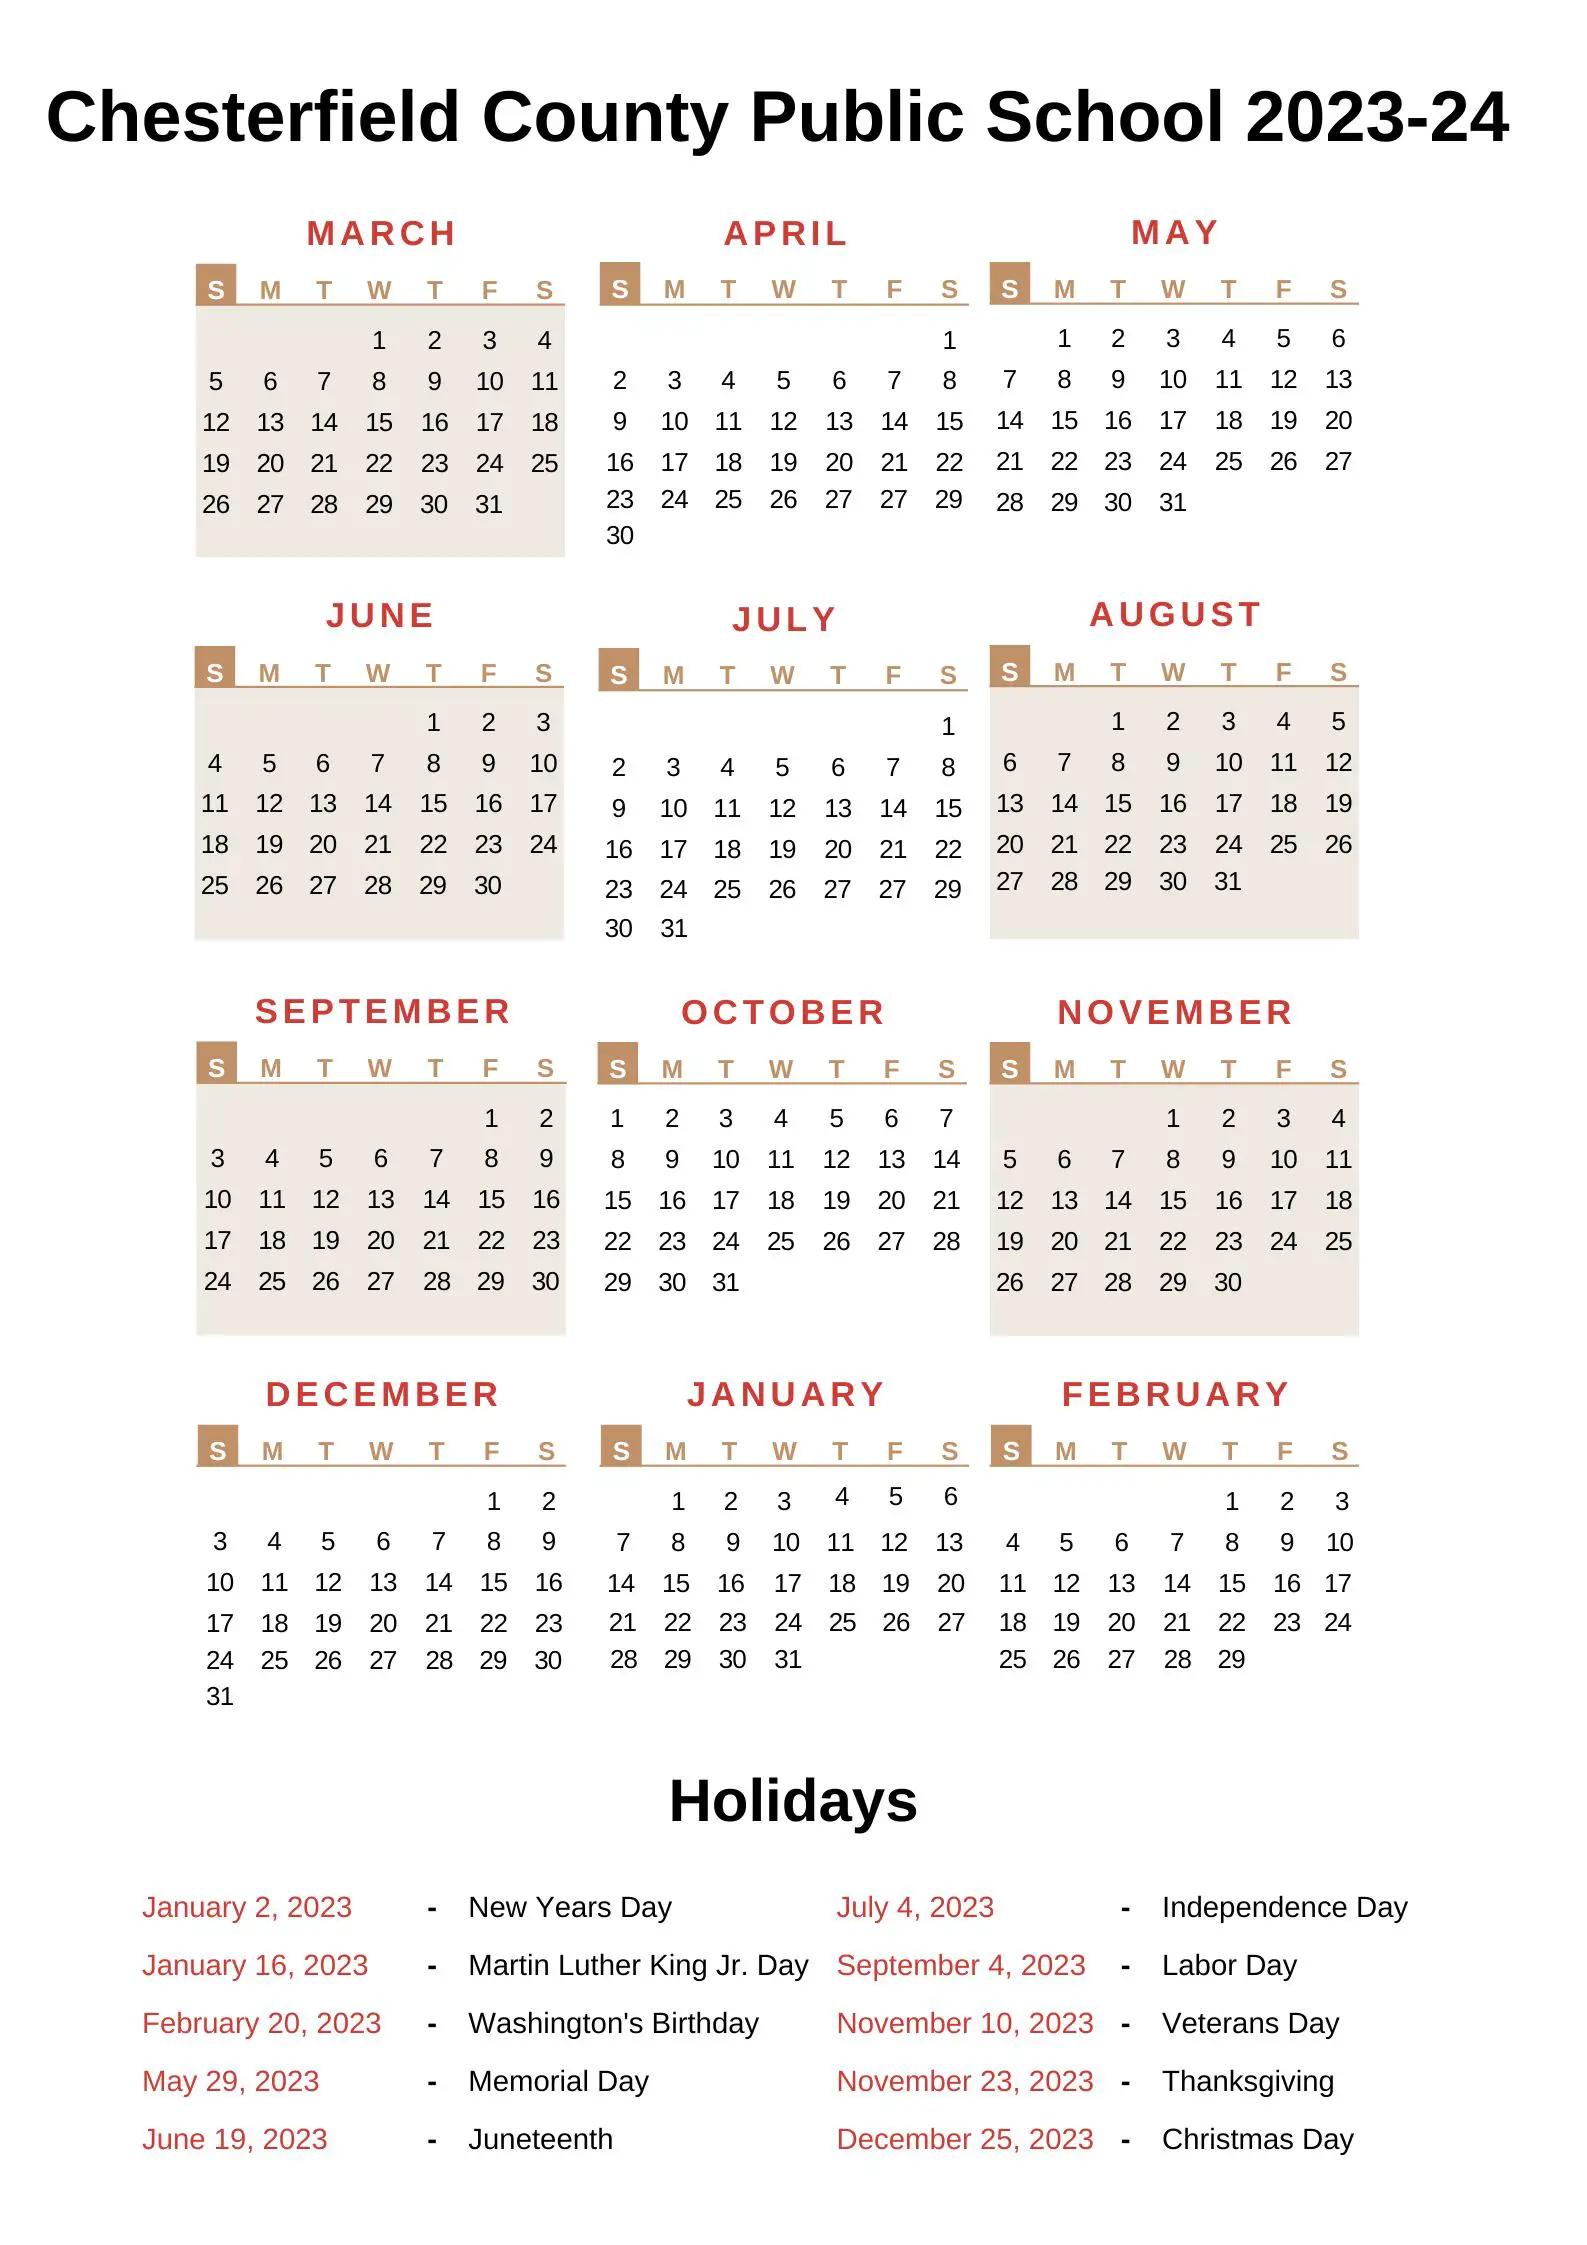 Chesterfield County Public Schools Calendar 202324 & Holidays